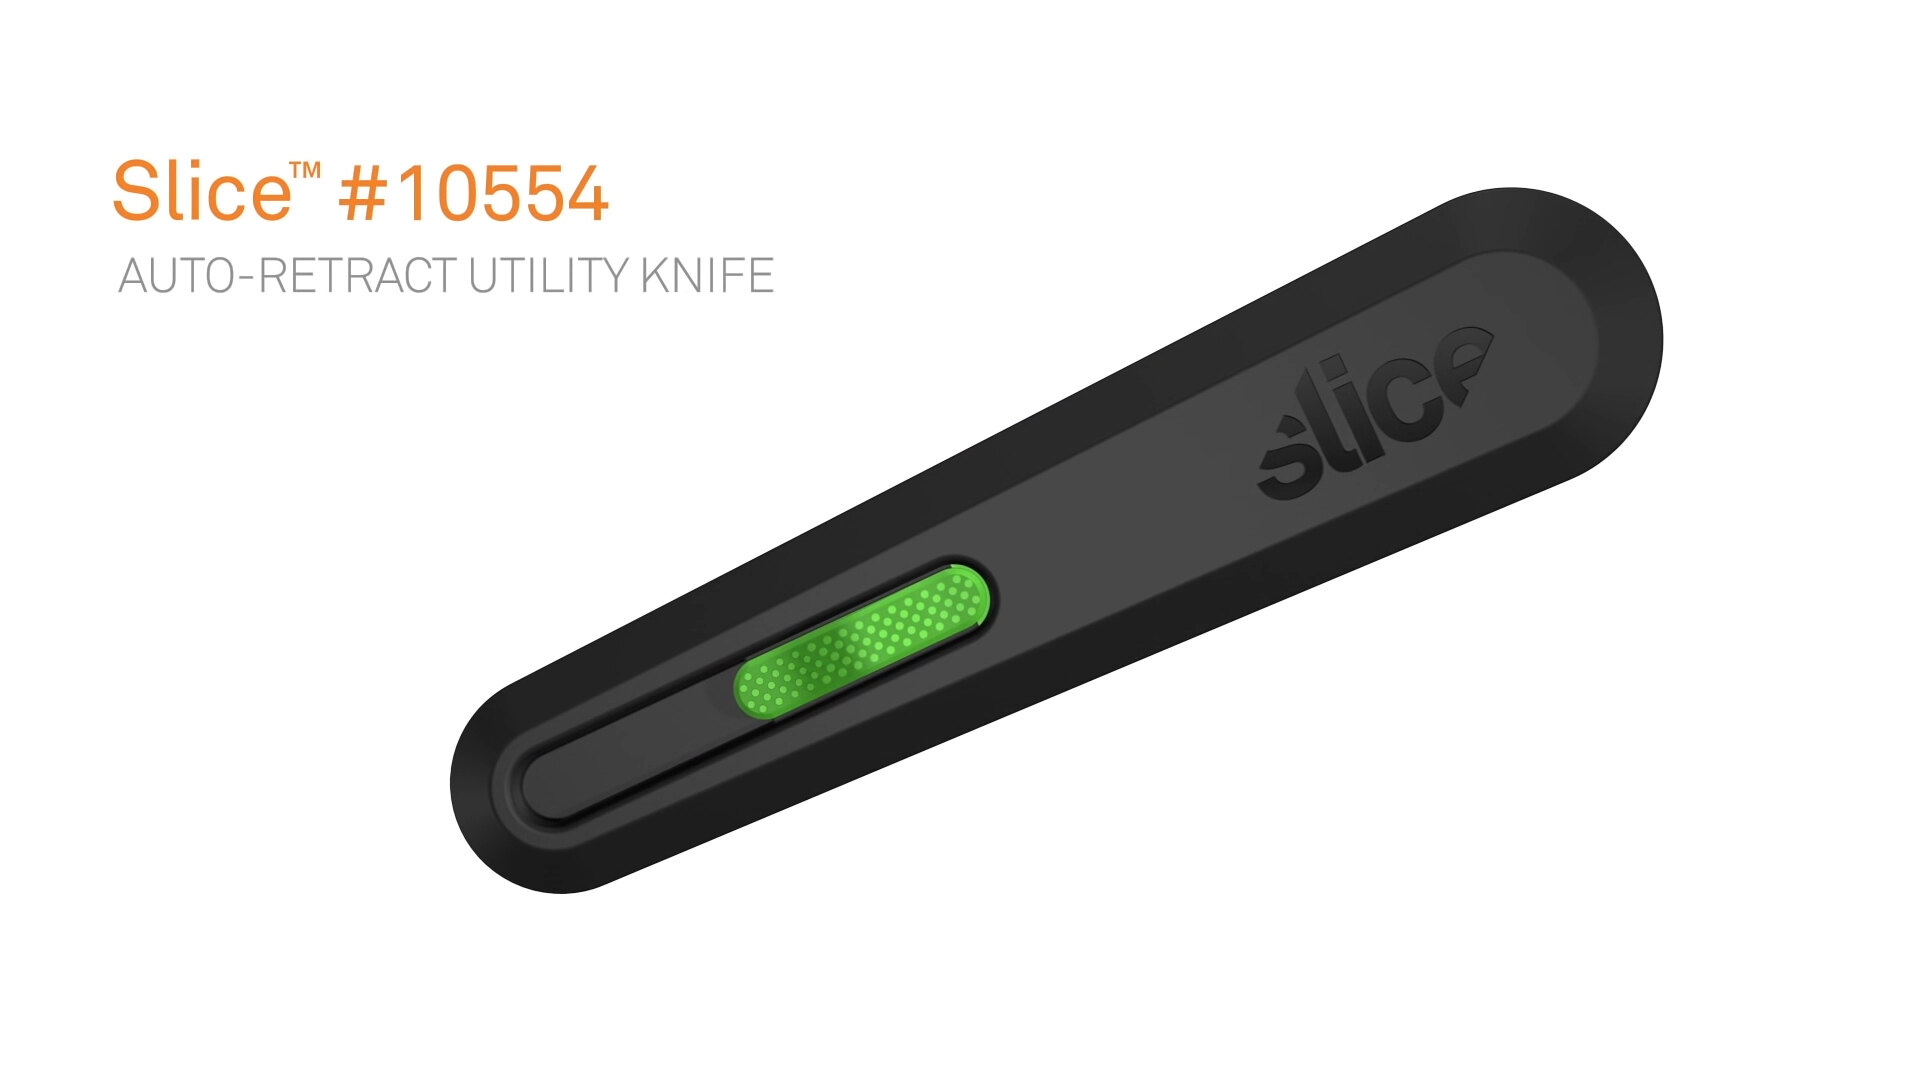 Slice Auto-Retractable Utility Knife 10554 Video